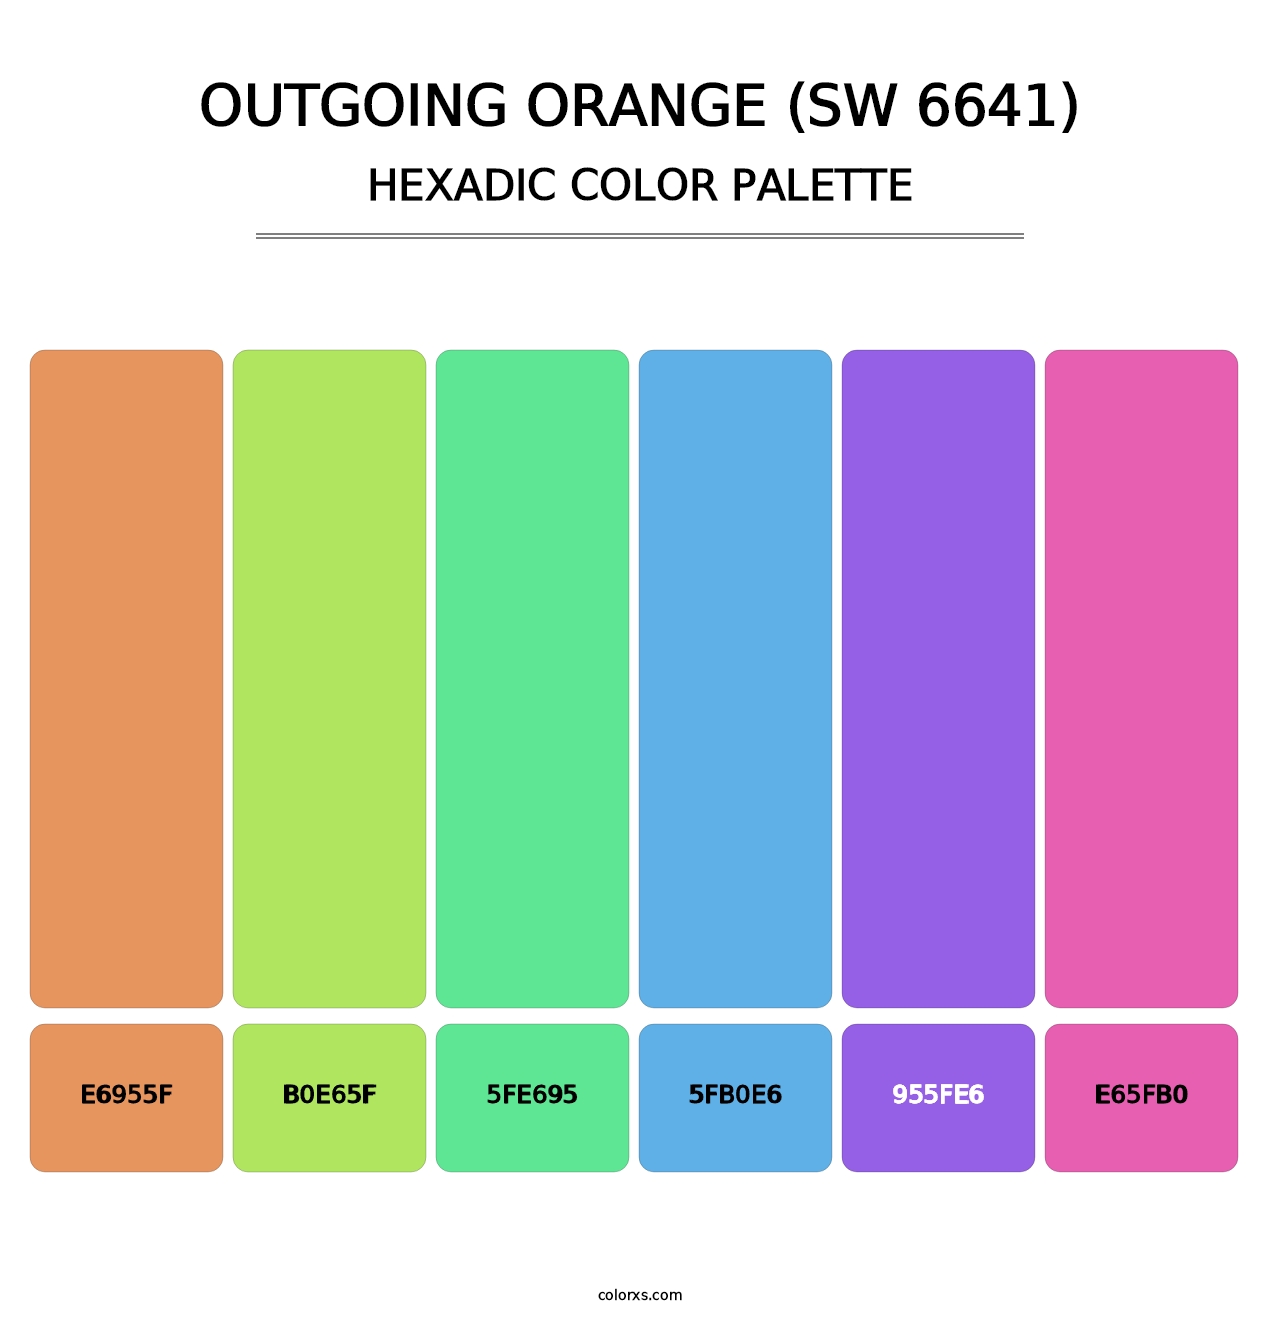 Outgoing Orange (SW 6641) - Hexadic Color Palette